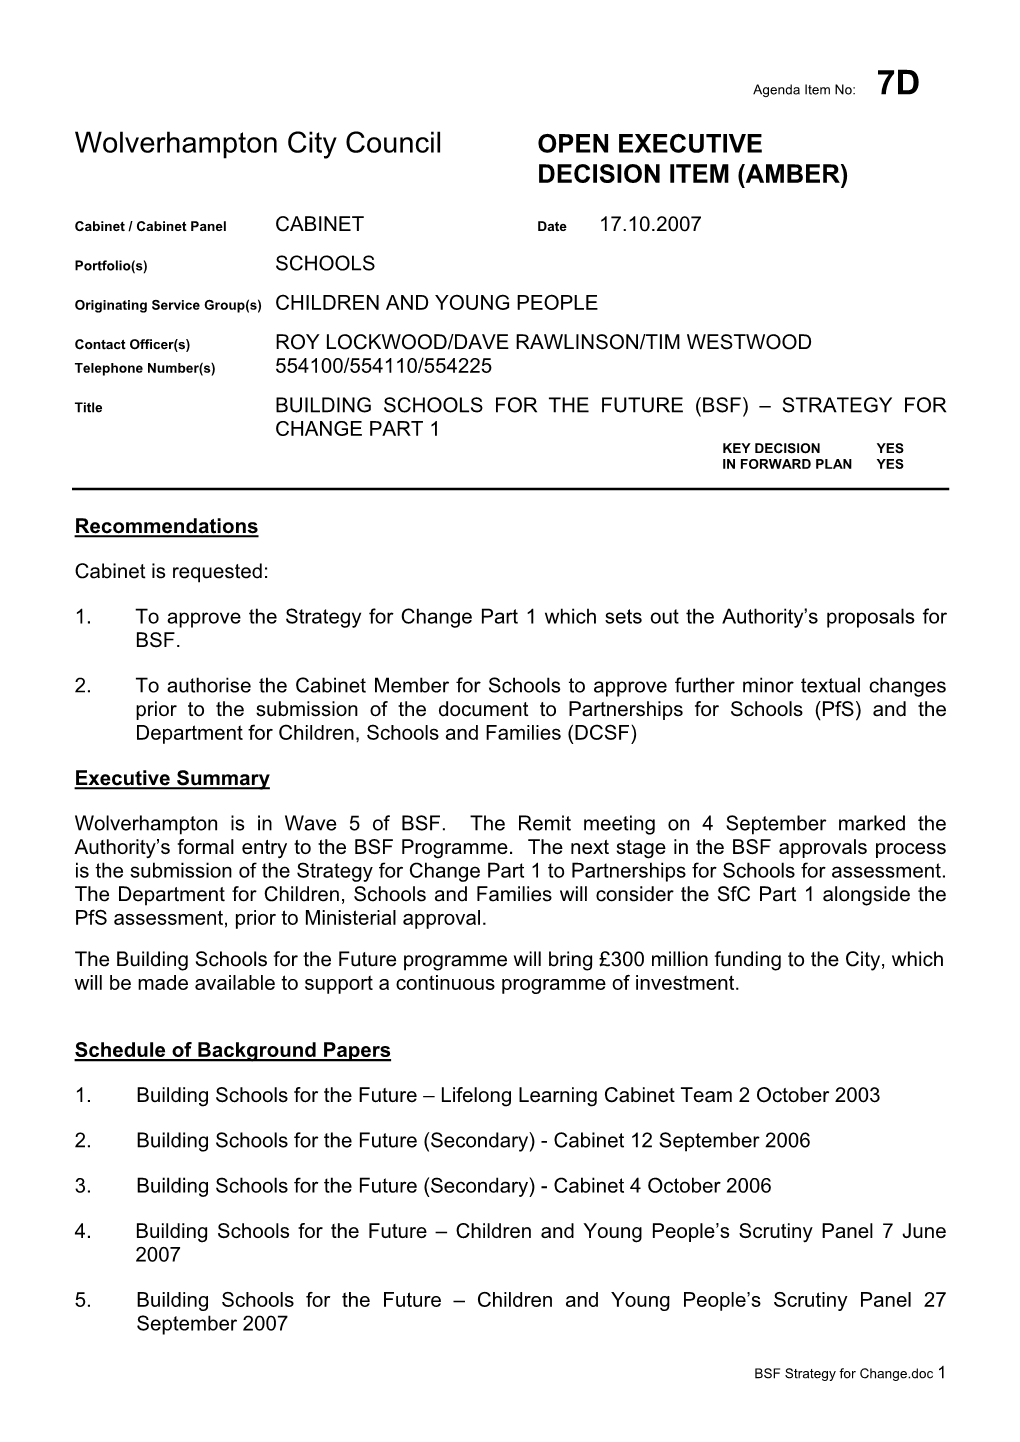 Wolverhampton City Council OPEN EXECUTIVE DECISION ITEM (AMBER)